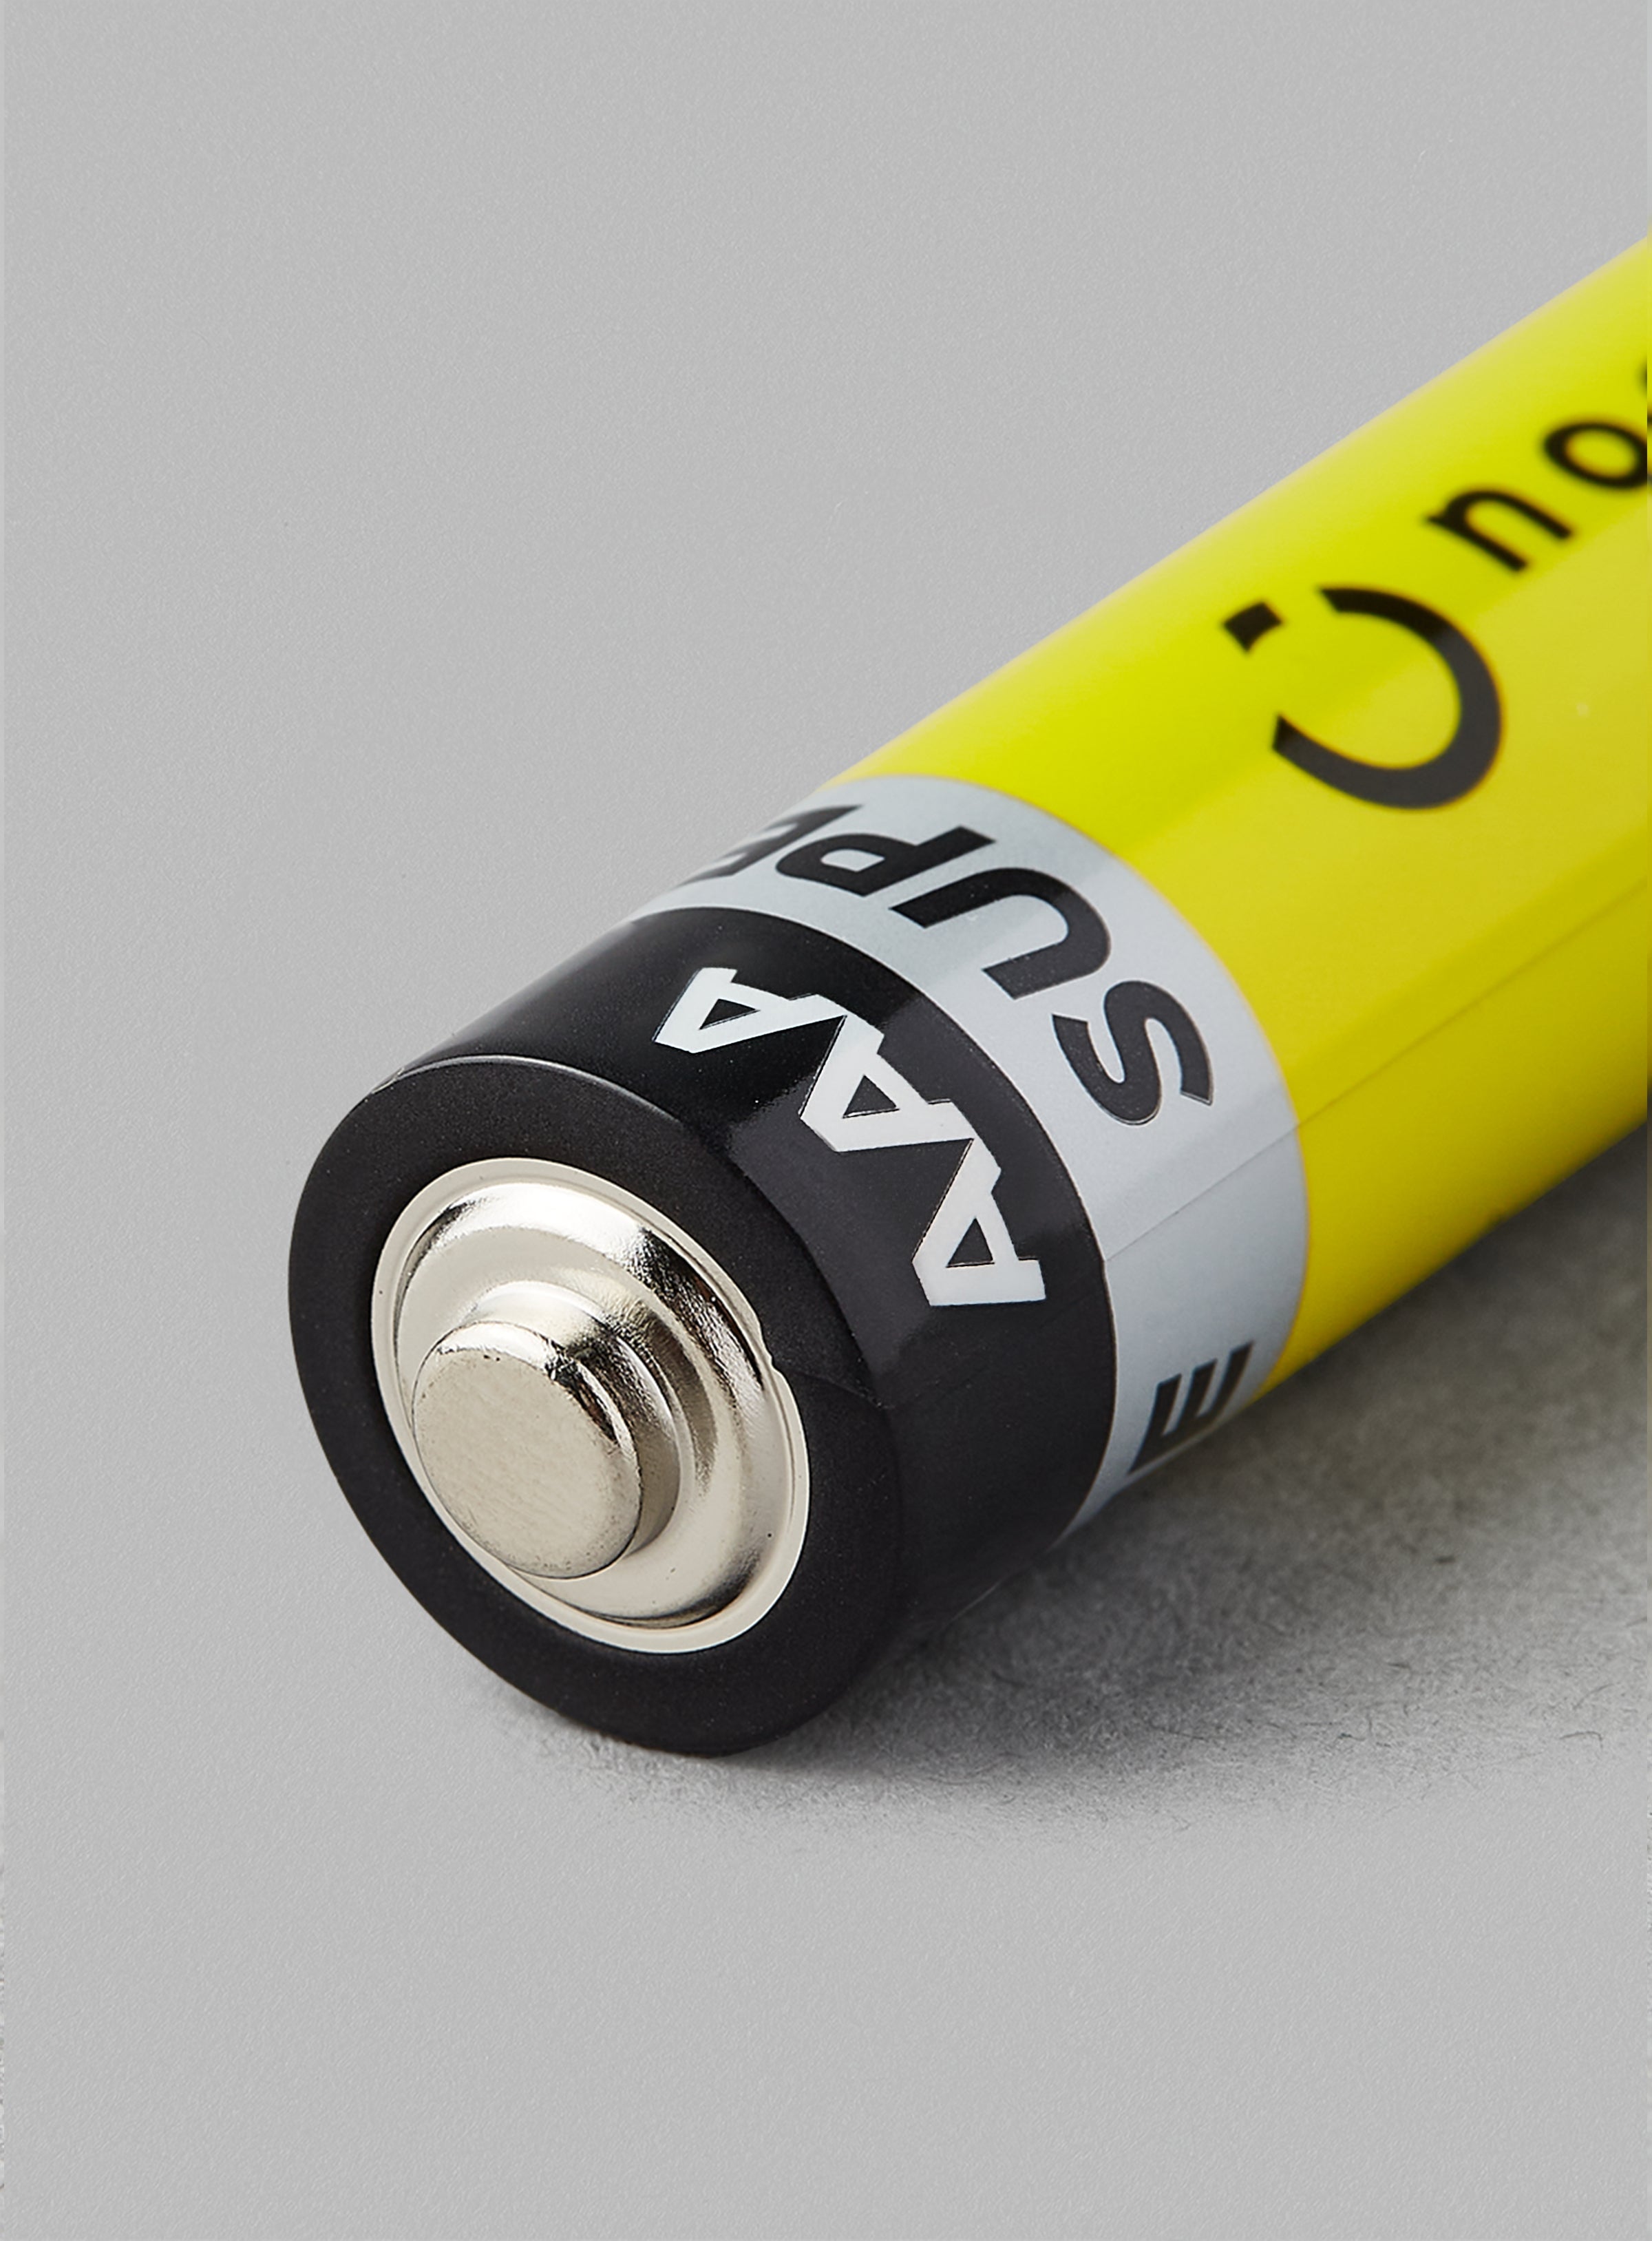 4-Piece LR03 AAA Alkaline Battery Set Yellow/Black 